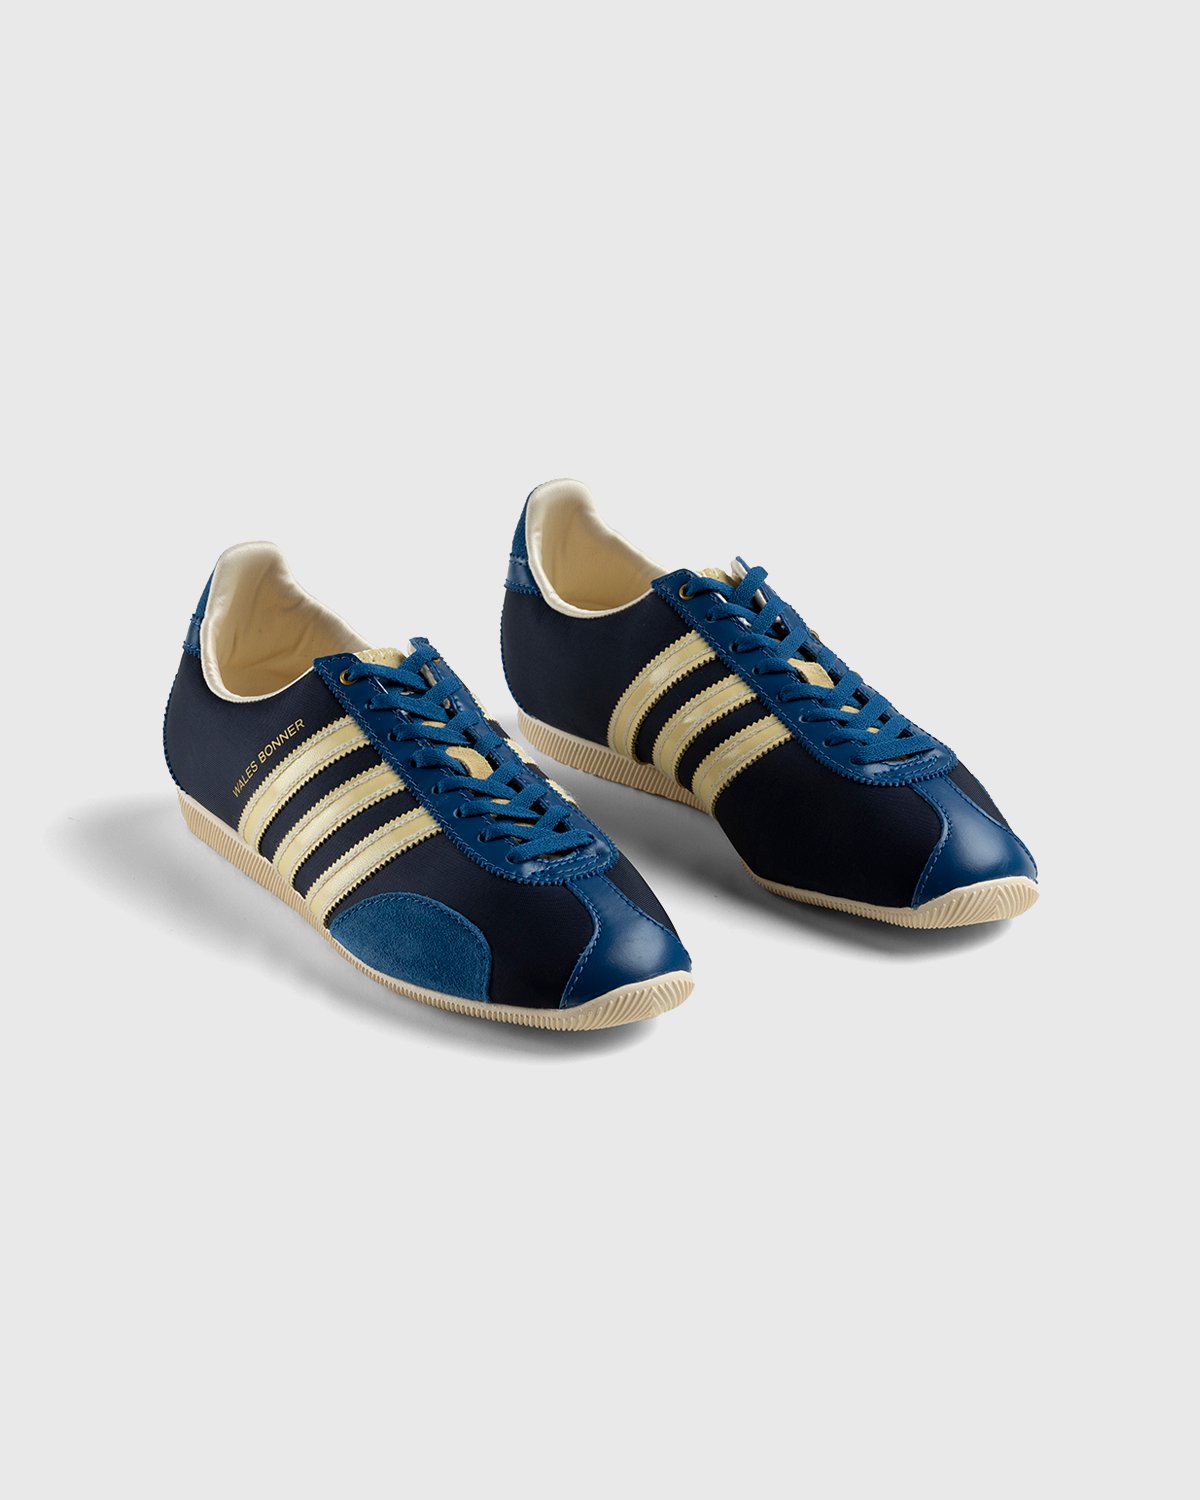 Adidas x Wales Bonner - Japan Legend Ink/Dark Marine/Ecru Tint - Footwear - Blue - Image 3